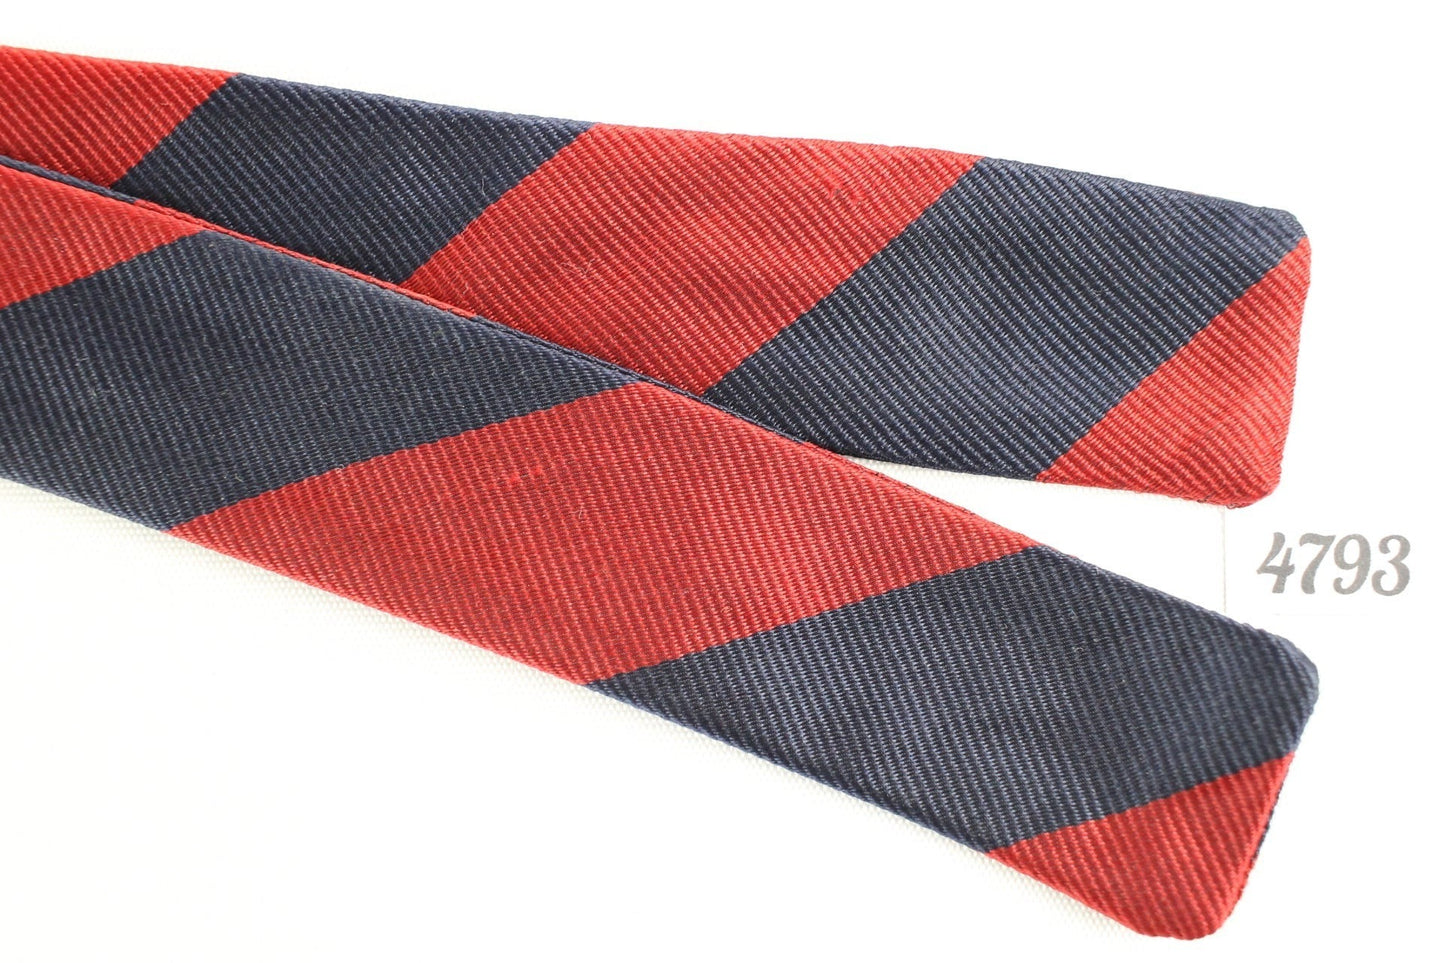 Skinny Self Tie Vintage Bow Tie Straight Ends Navy Red Broad Stripes Adjustable